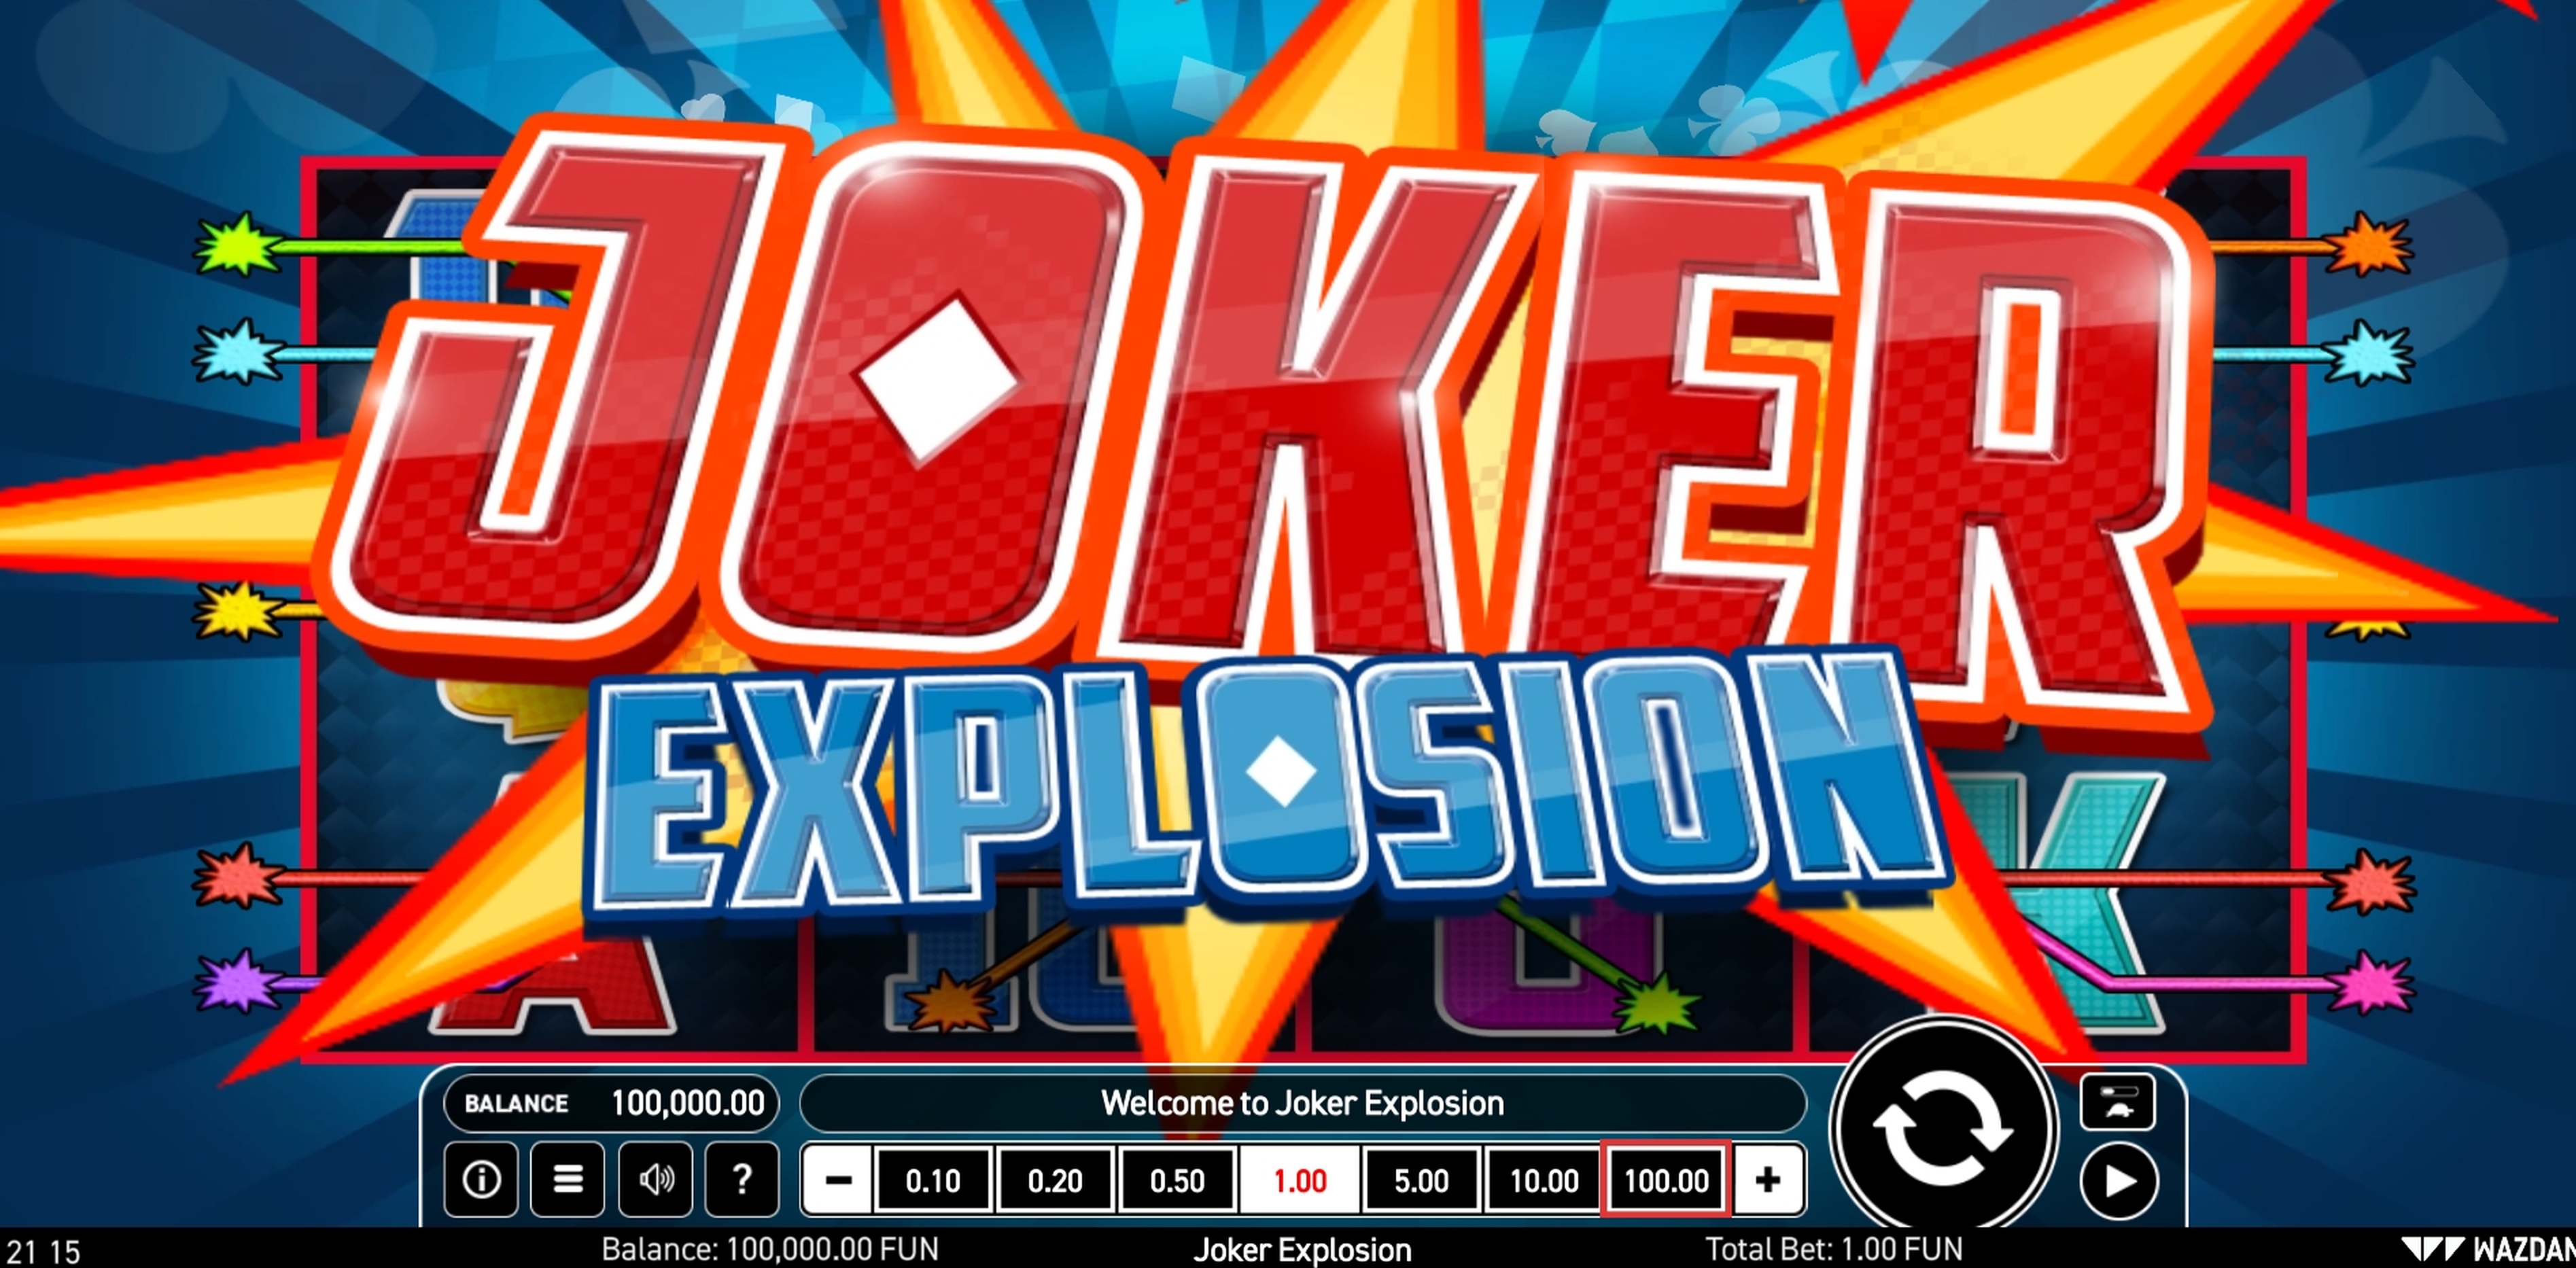 Play Joker Explosion Free Casino Slot Game by Wazdan